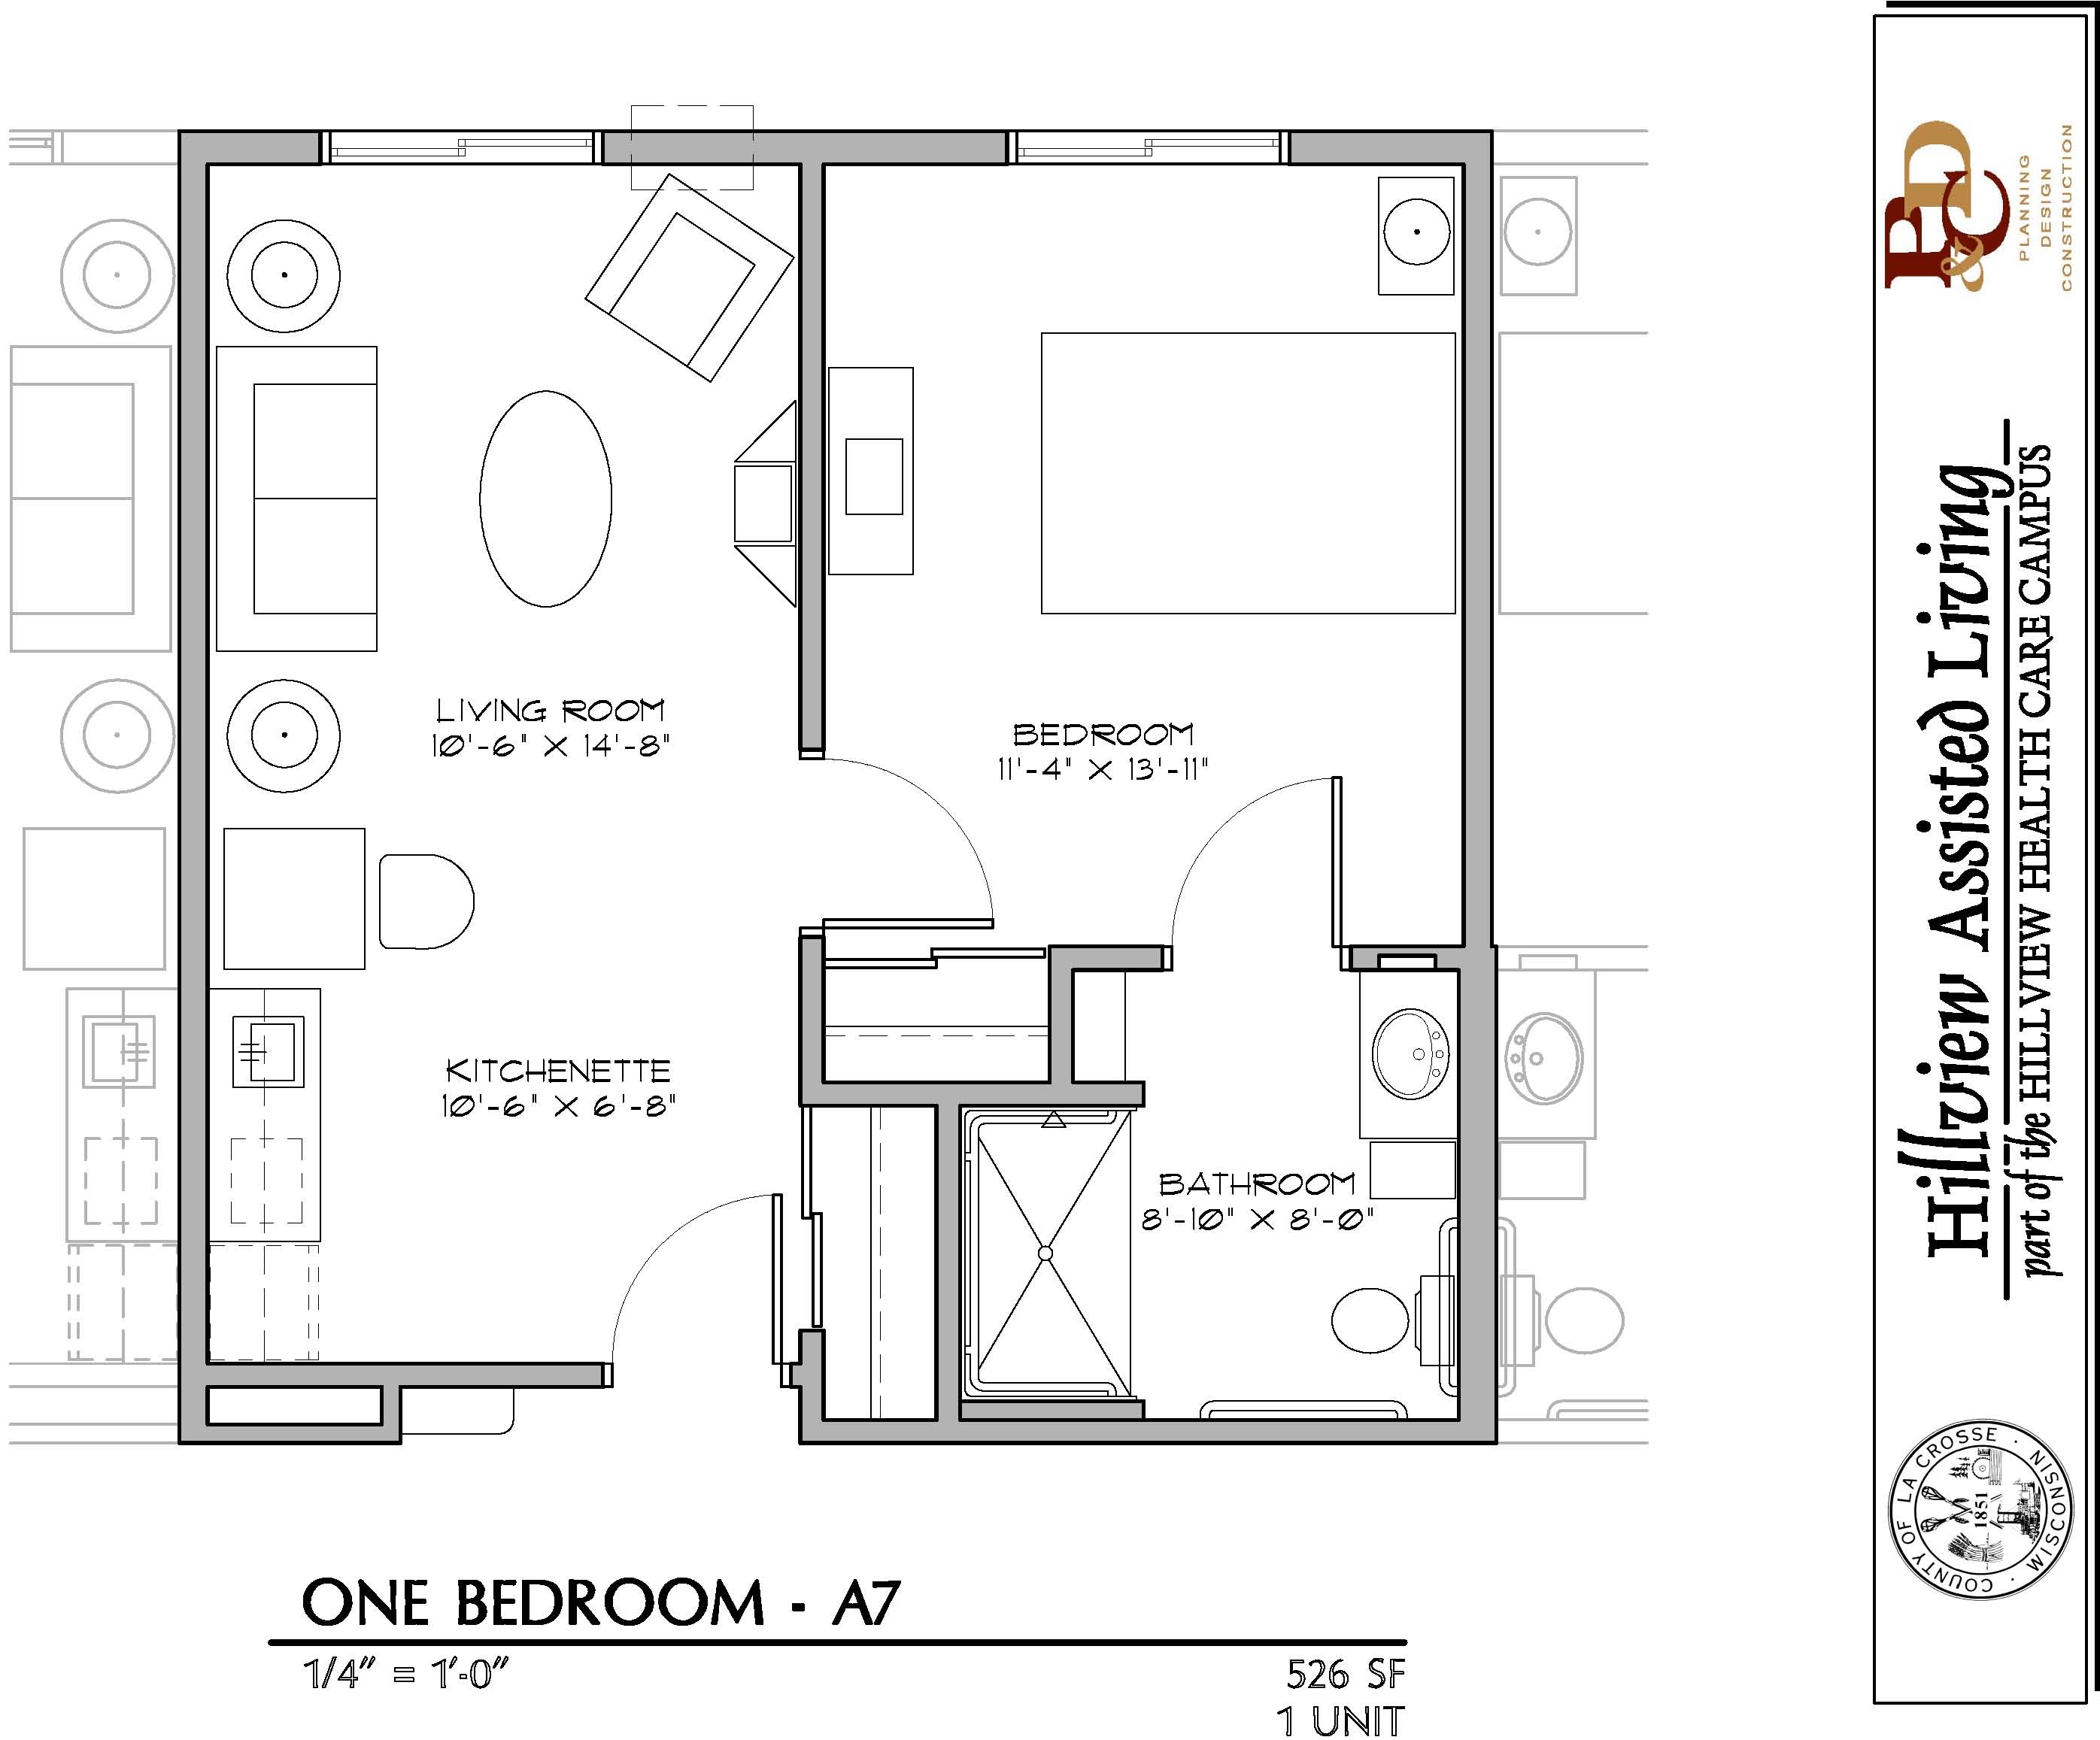 Hillview Terrace - One Bedroom